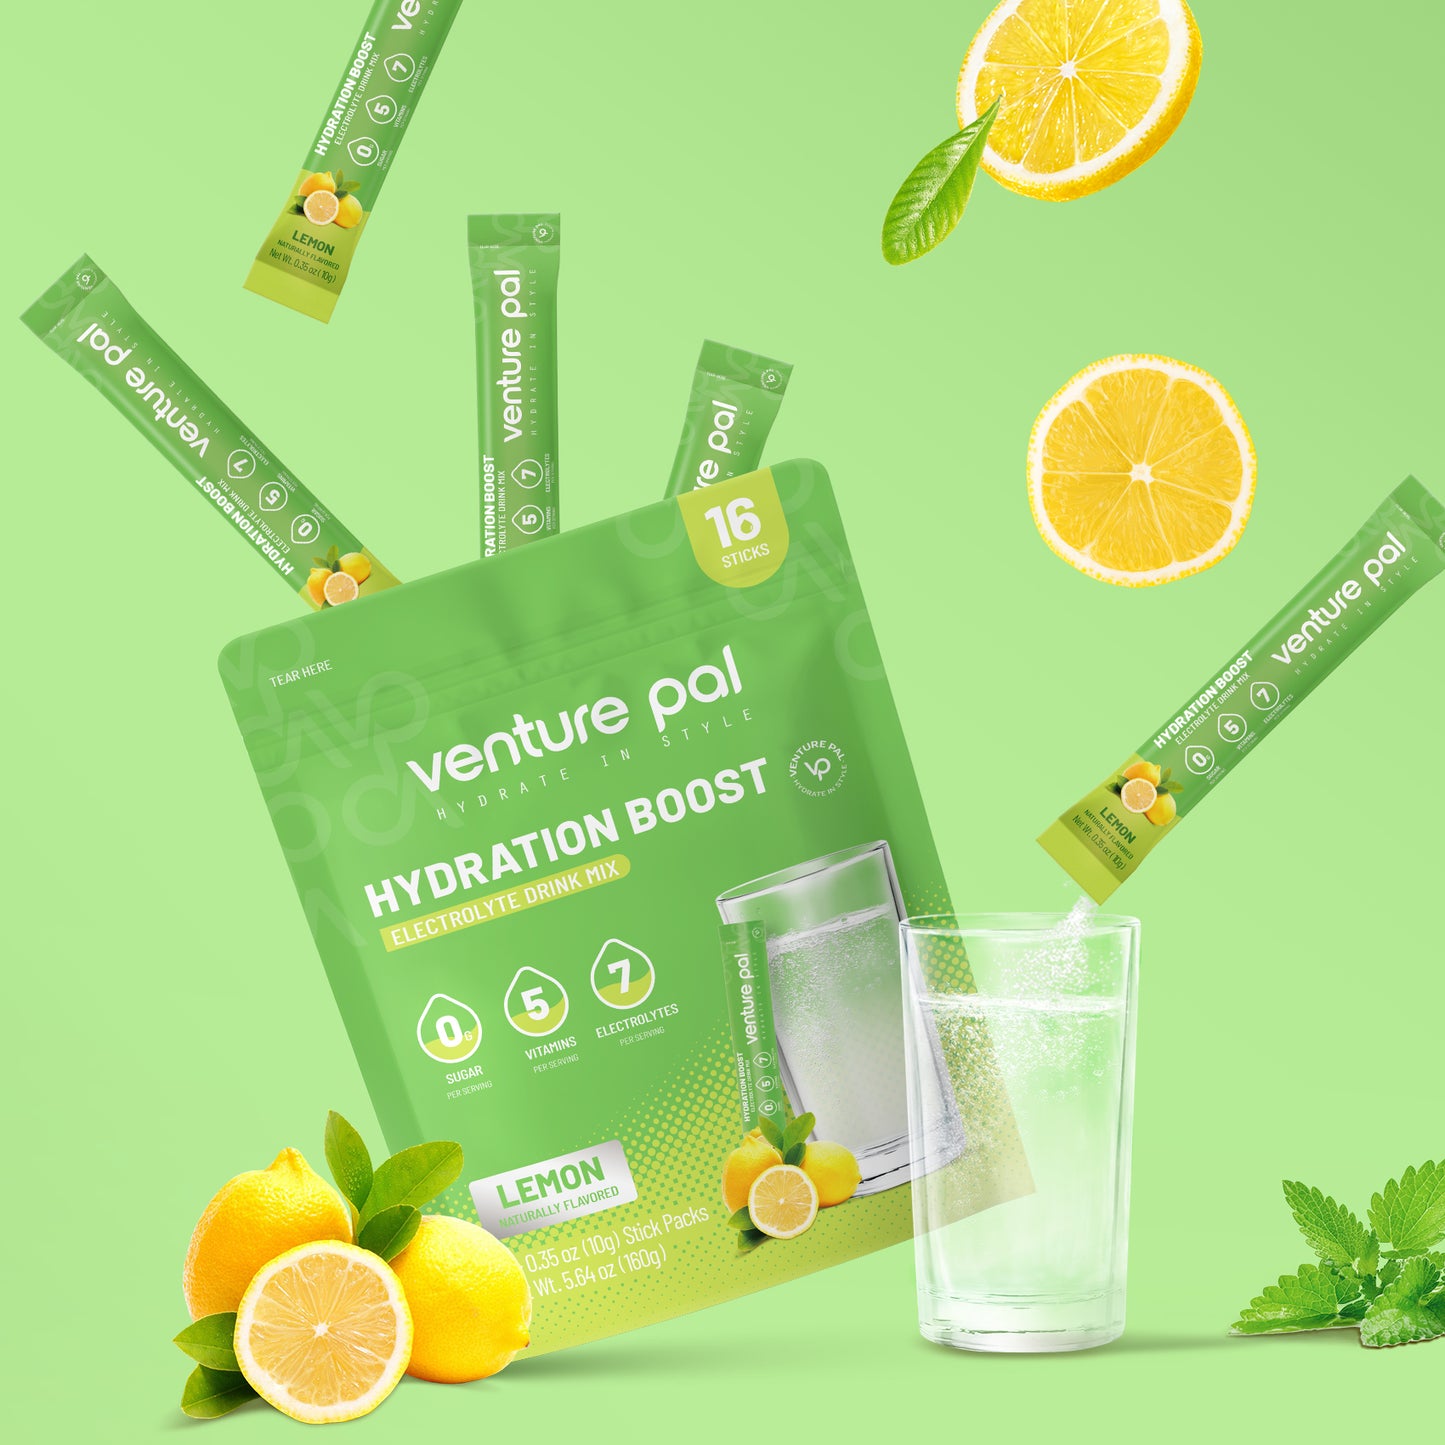 Venture Pal Sugar Free Electrolyte Powder Packets - Lemon Flavor - 16 Sticks